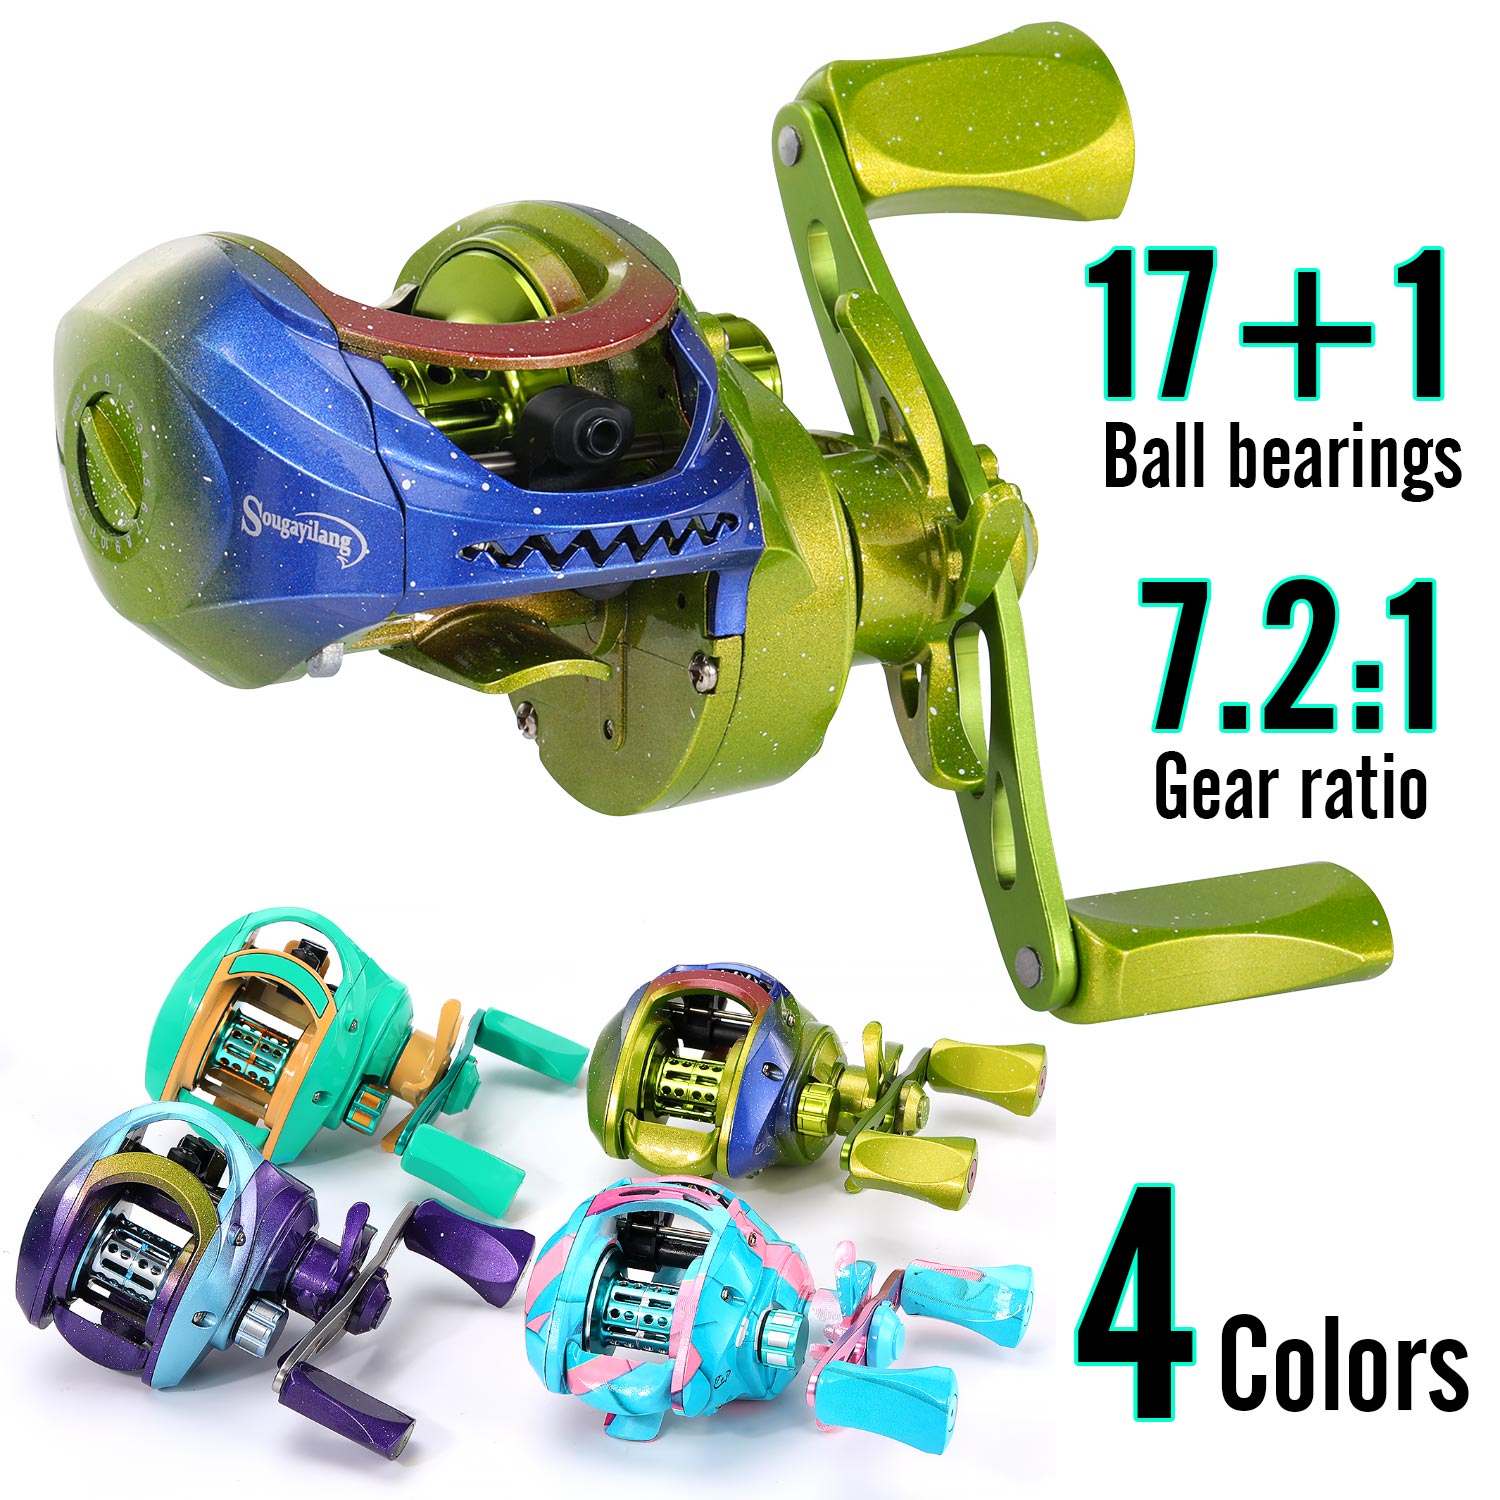 SOUGAYILANG Baitcasting Fishing Reel 12+1 Ball Bearings 7.2:1 Gear Ratio  Magnetic Brake Left Right Hand Lure Bass Fishing Reels